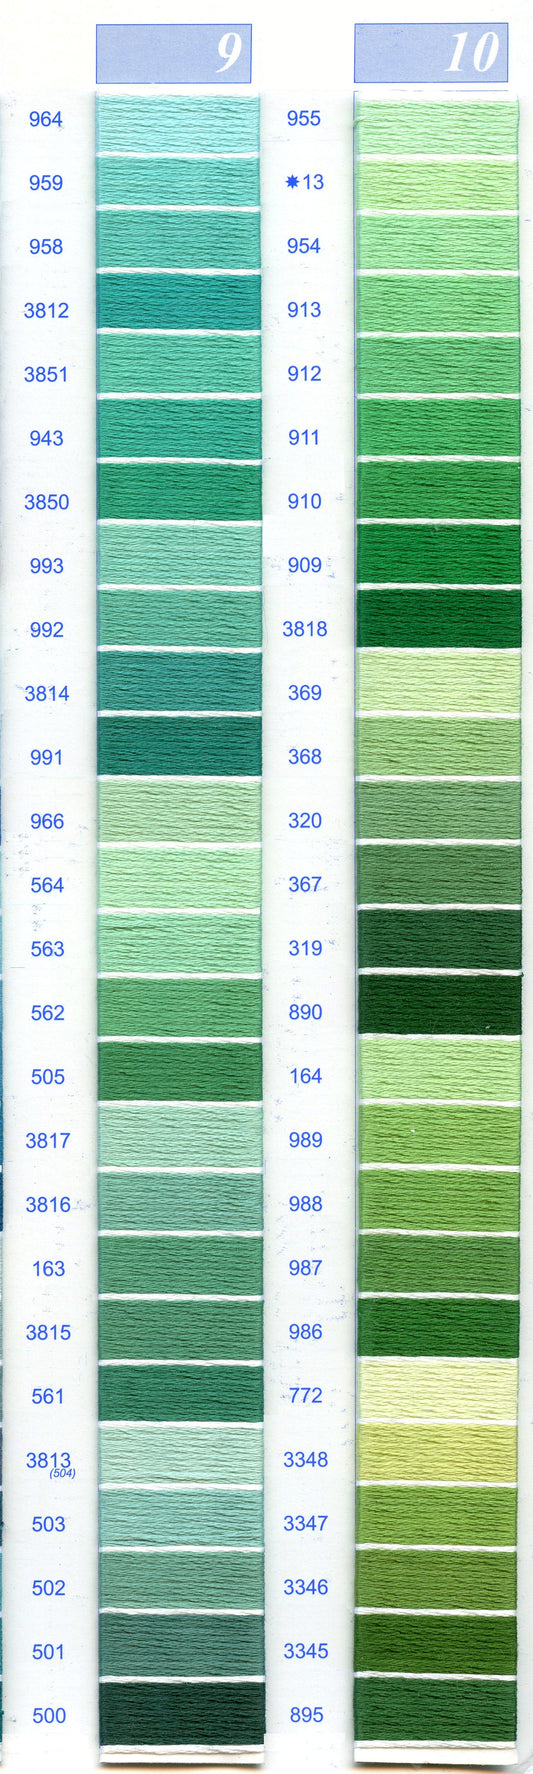 DMC Embroidery Floss Chart - Columns 9 & 10